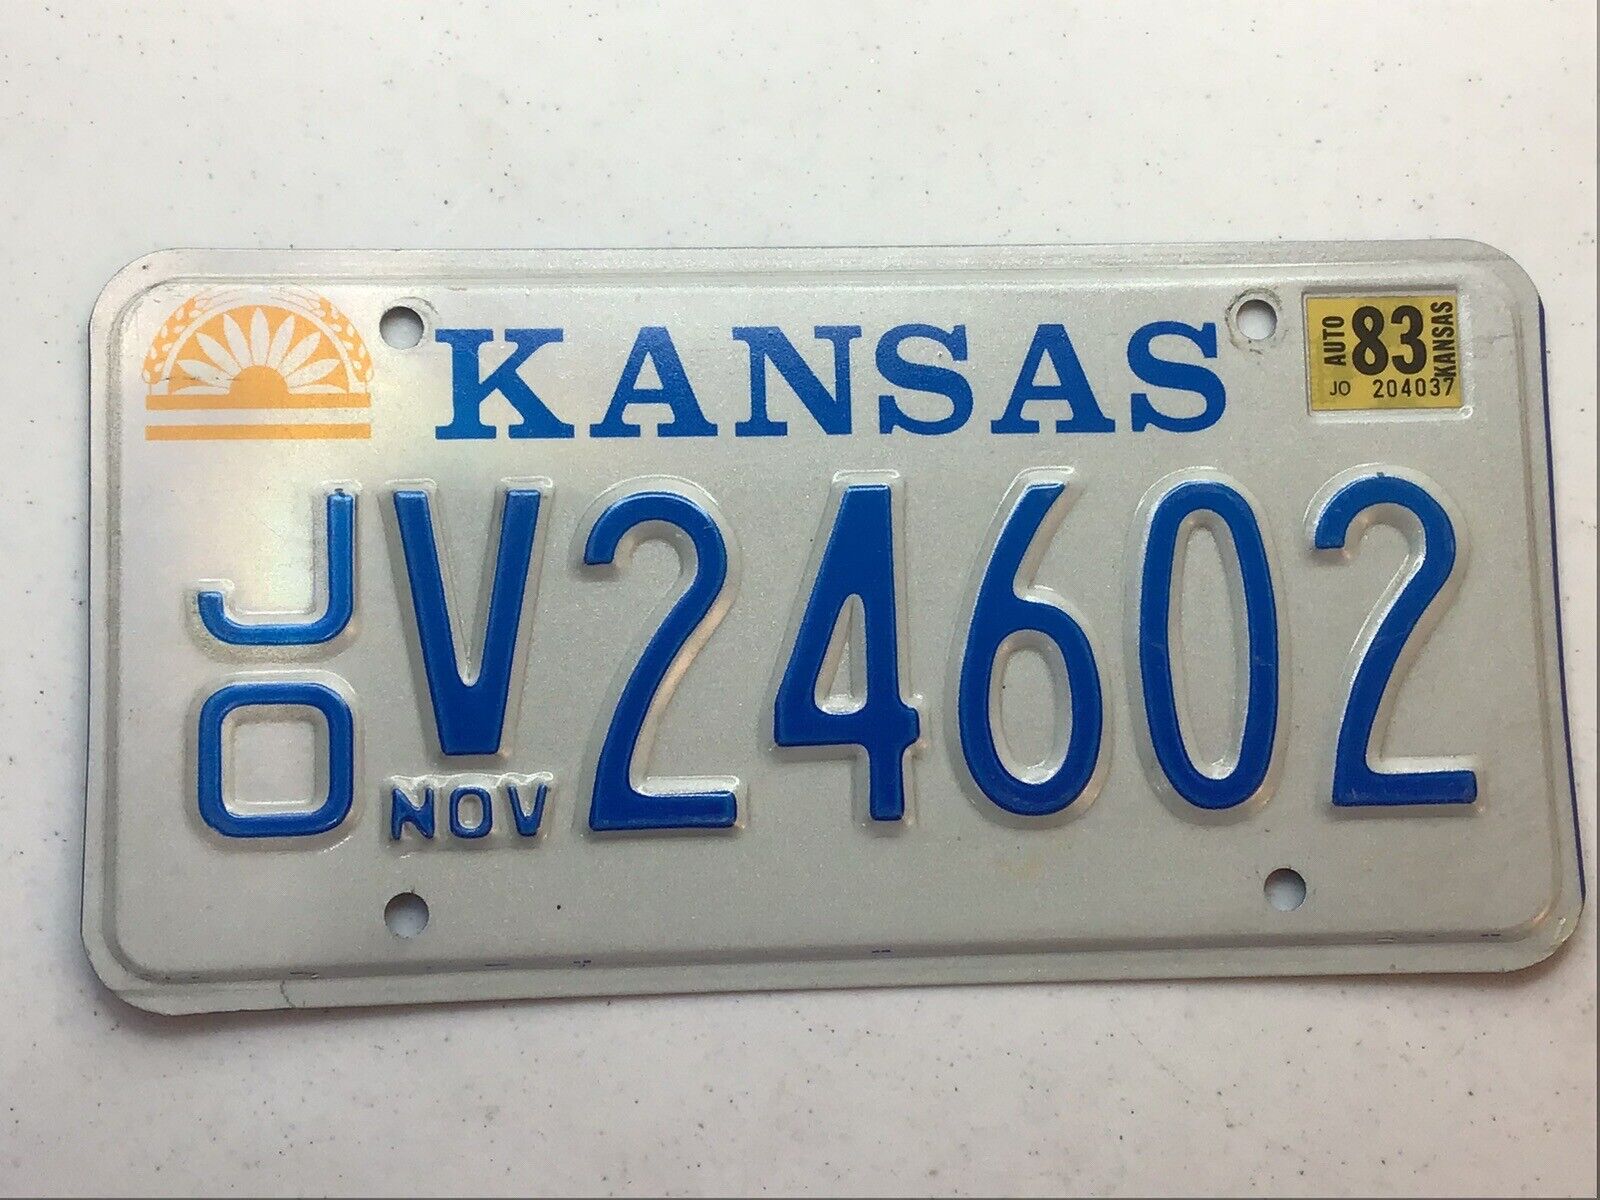 1983 Kansas passenger car license plate Johnson county Tag# V24602 Nov